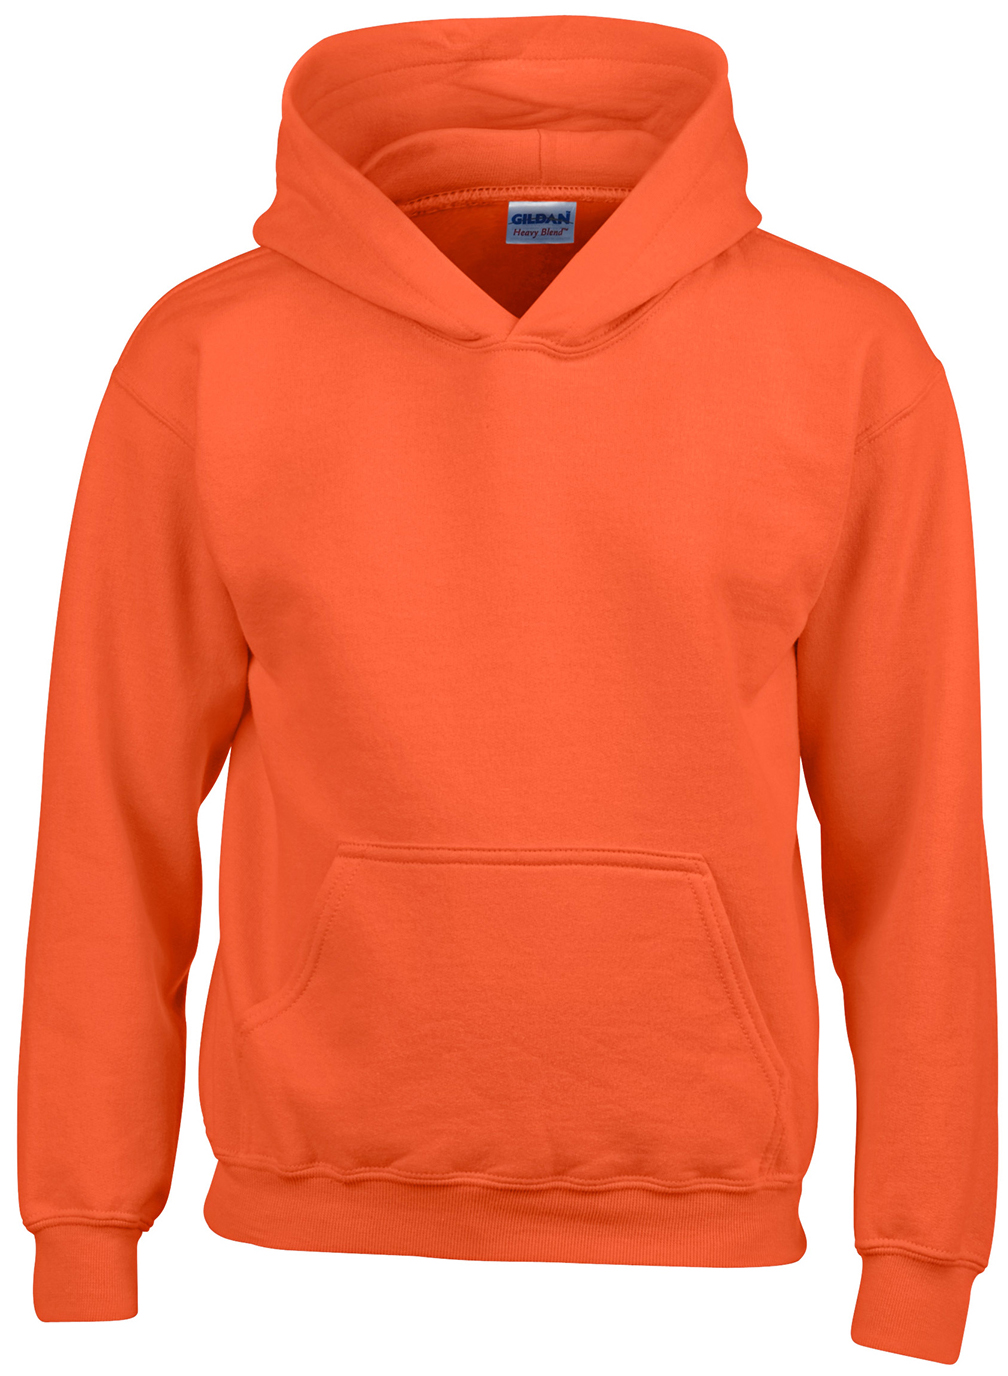 E71165 Gildan Adult Youth Heavy Blend Hooded Sweatshirts